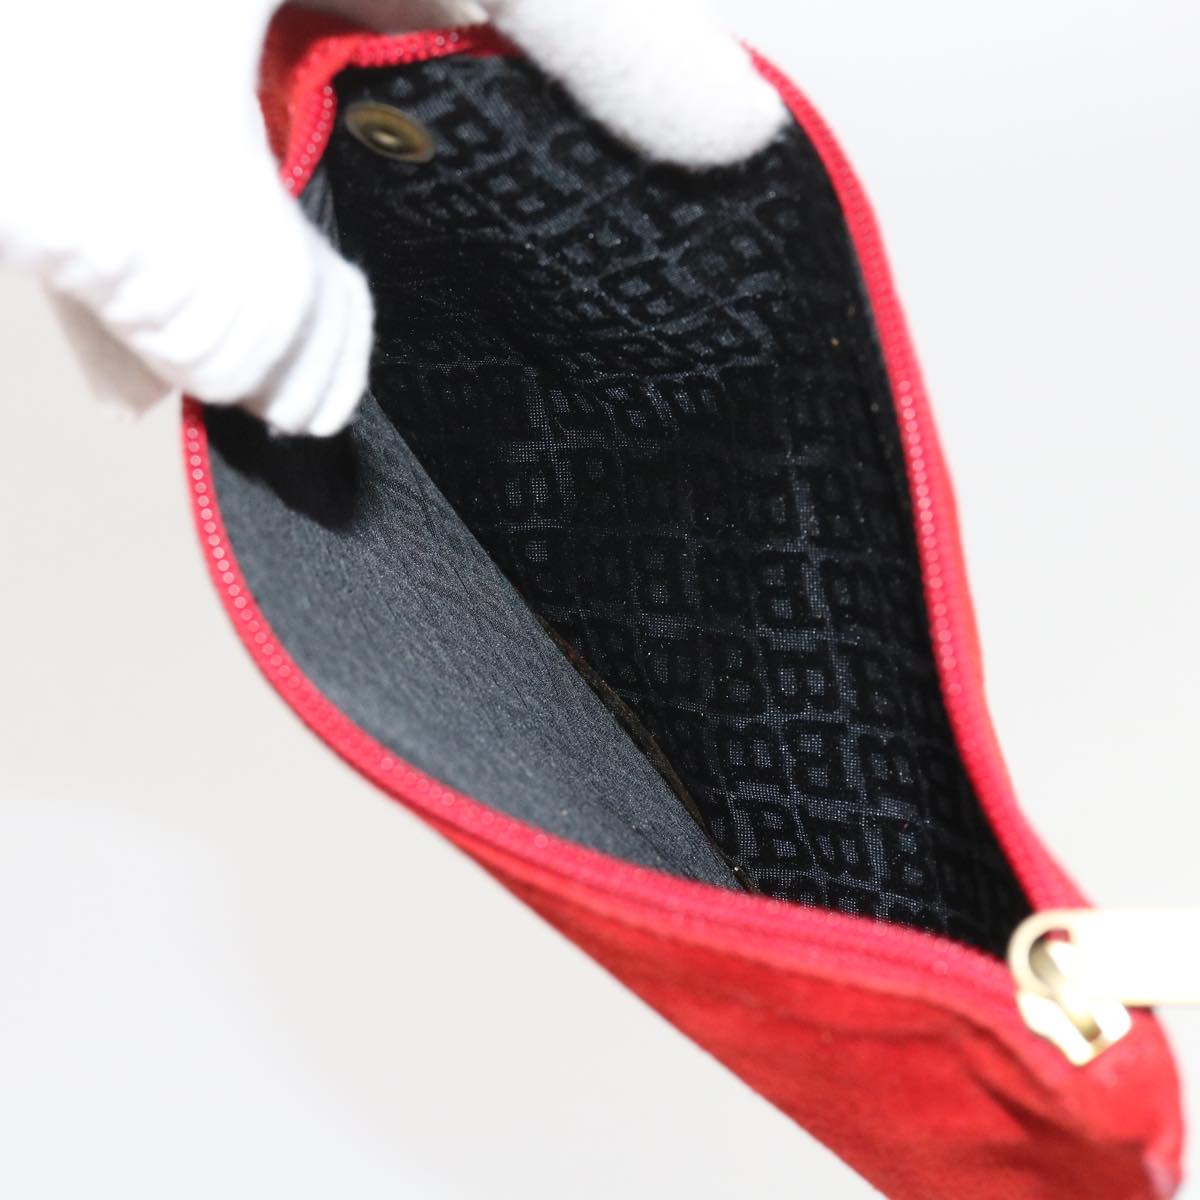 BALLY Shoulder Bag Wallet Canvas Leather 6Set Black Brown Red Auth bs8879